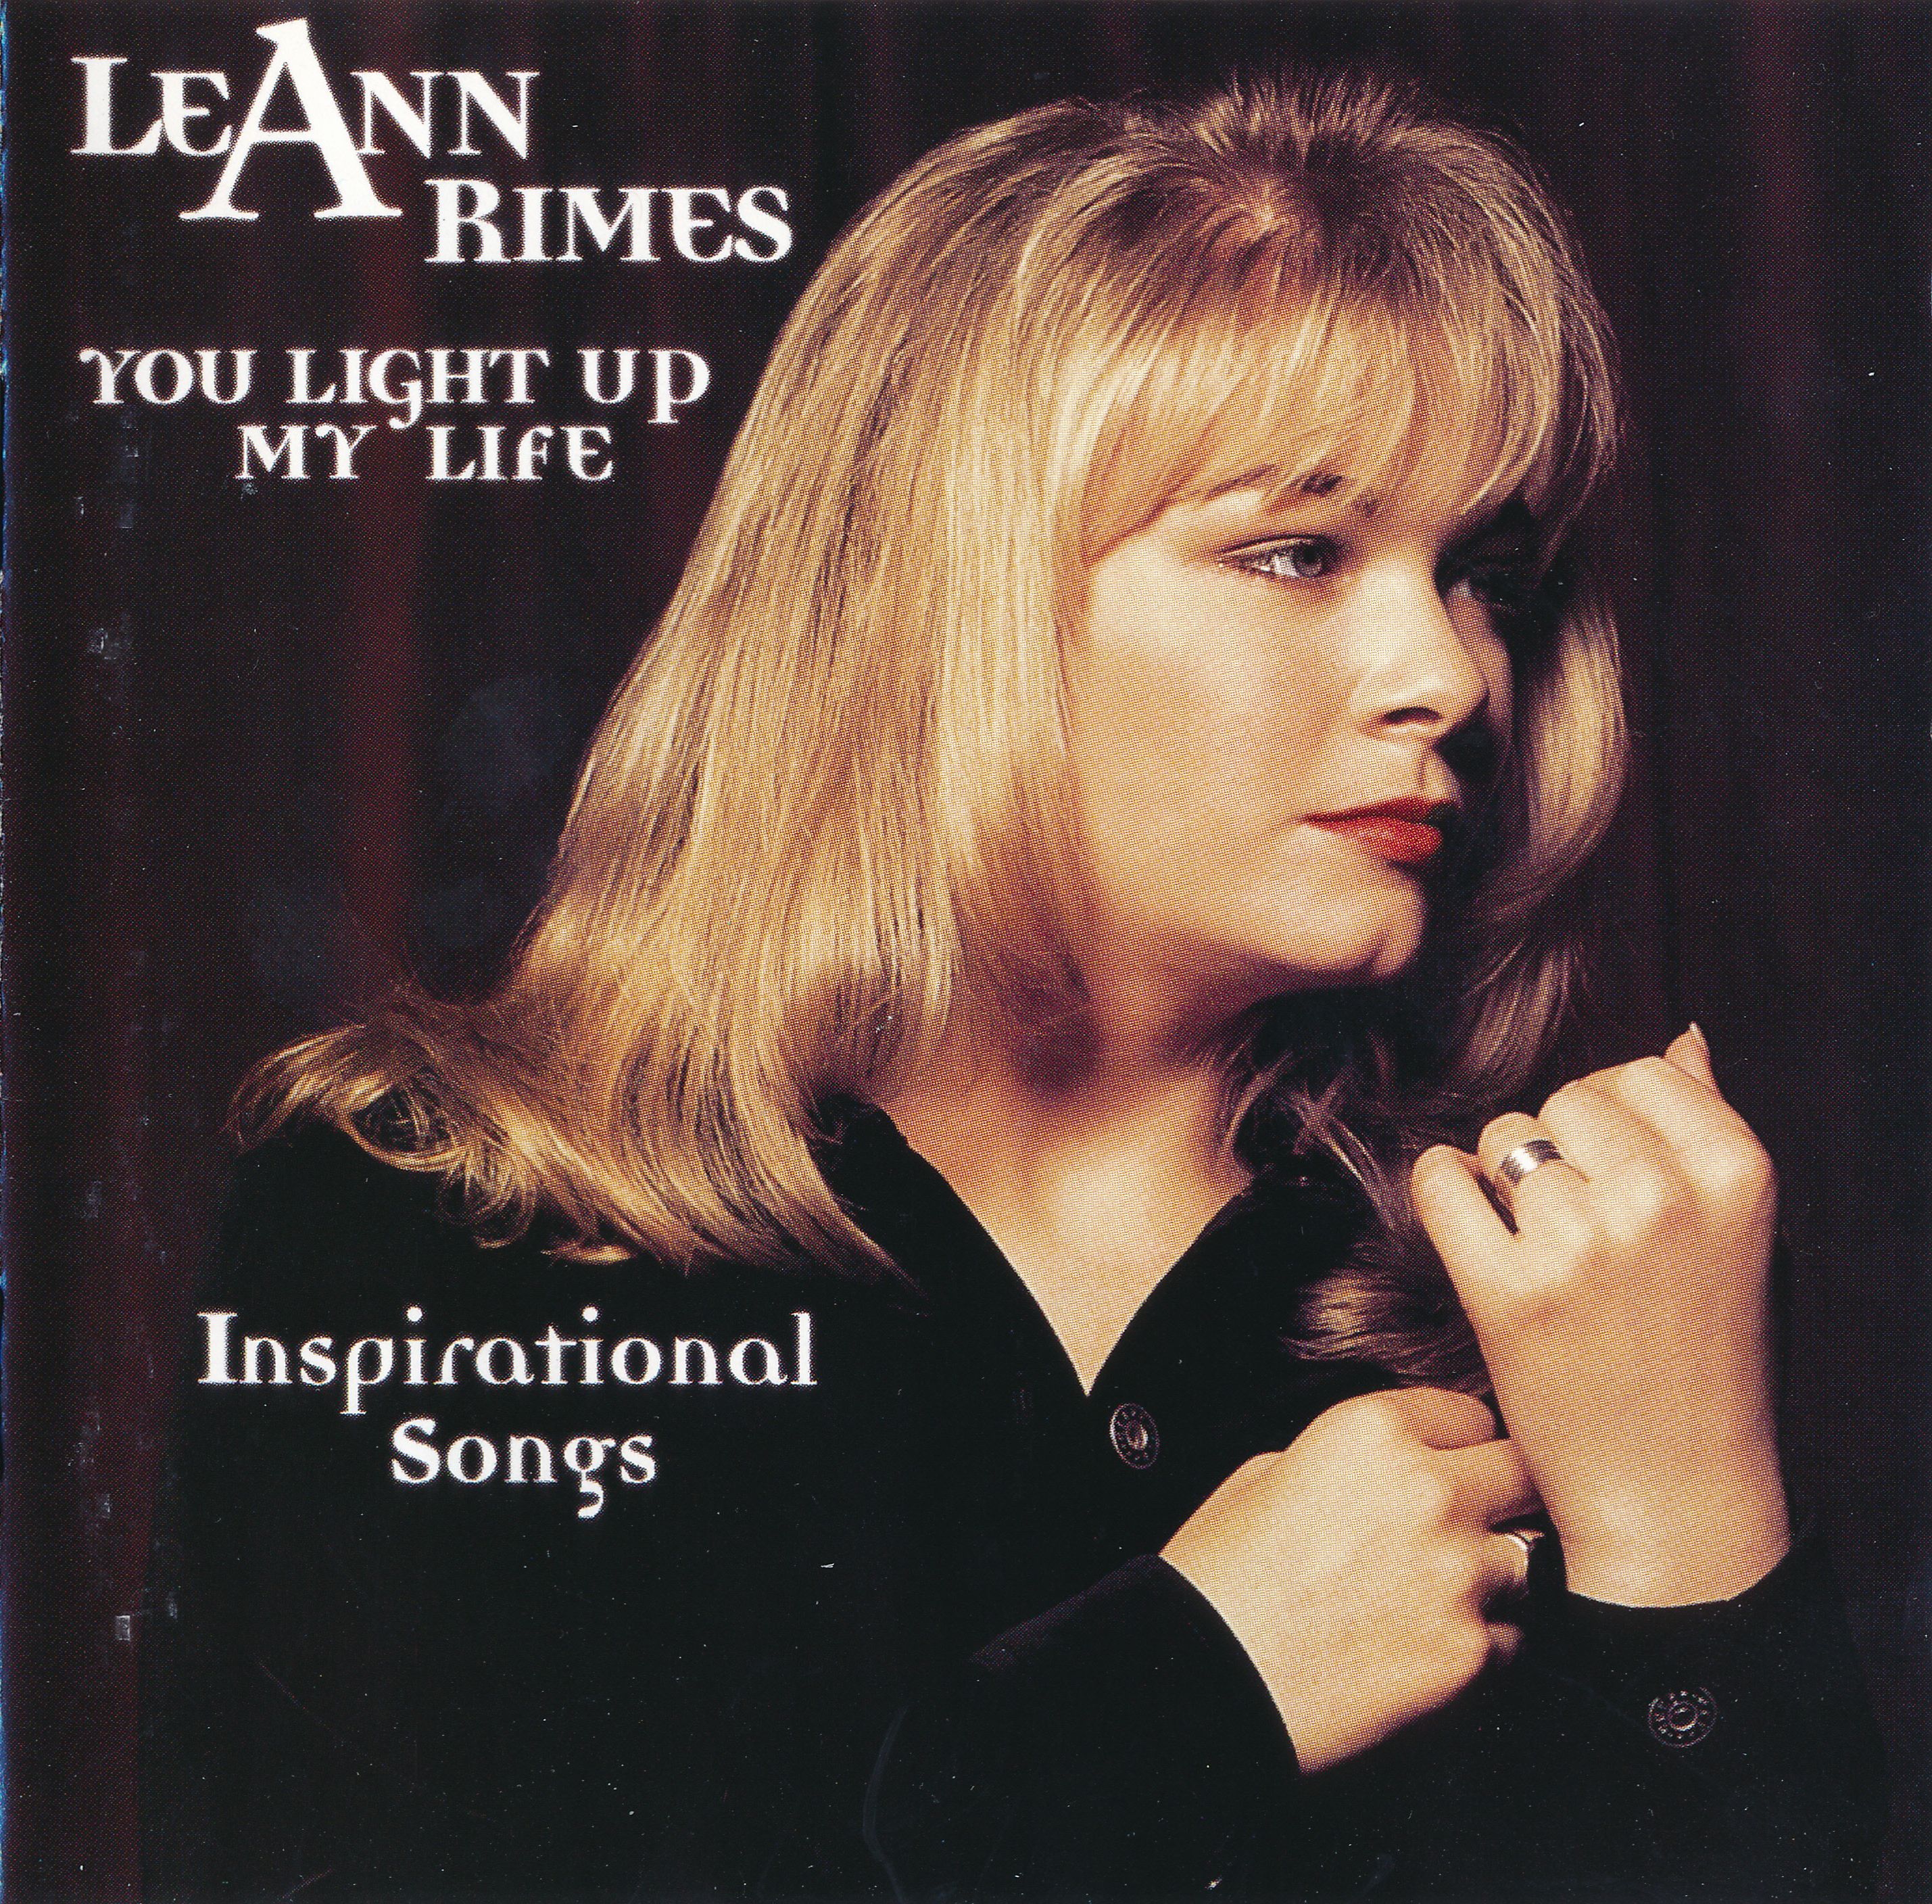 LeAnn Rimes - You Light Up My Life - Album Cover